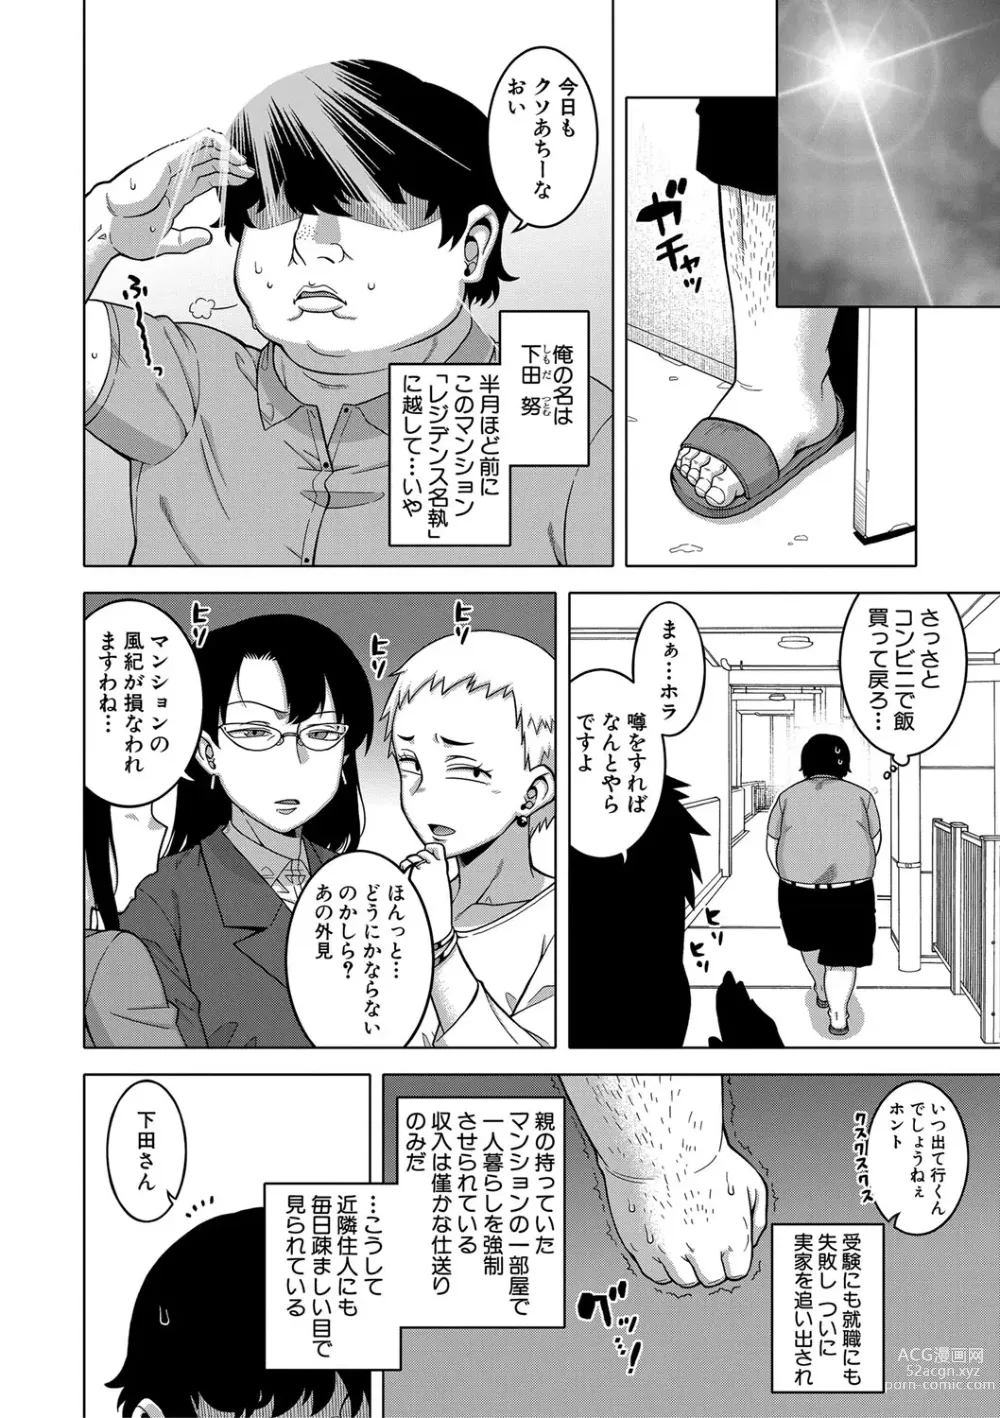 Page 9 of manga Saimin Fuufunaka Chousa - Investigate marital relationship with hypnosis